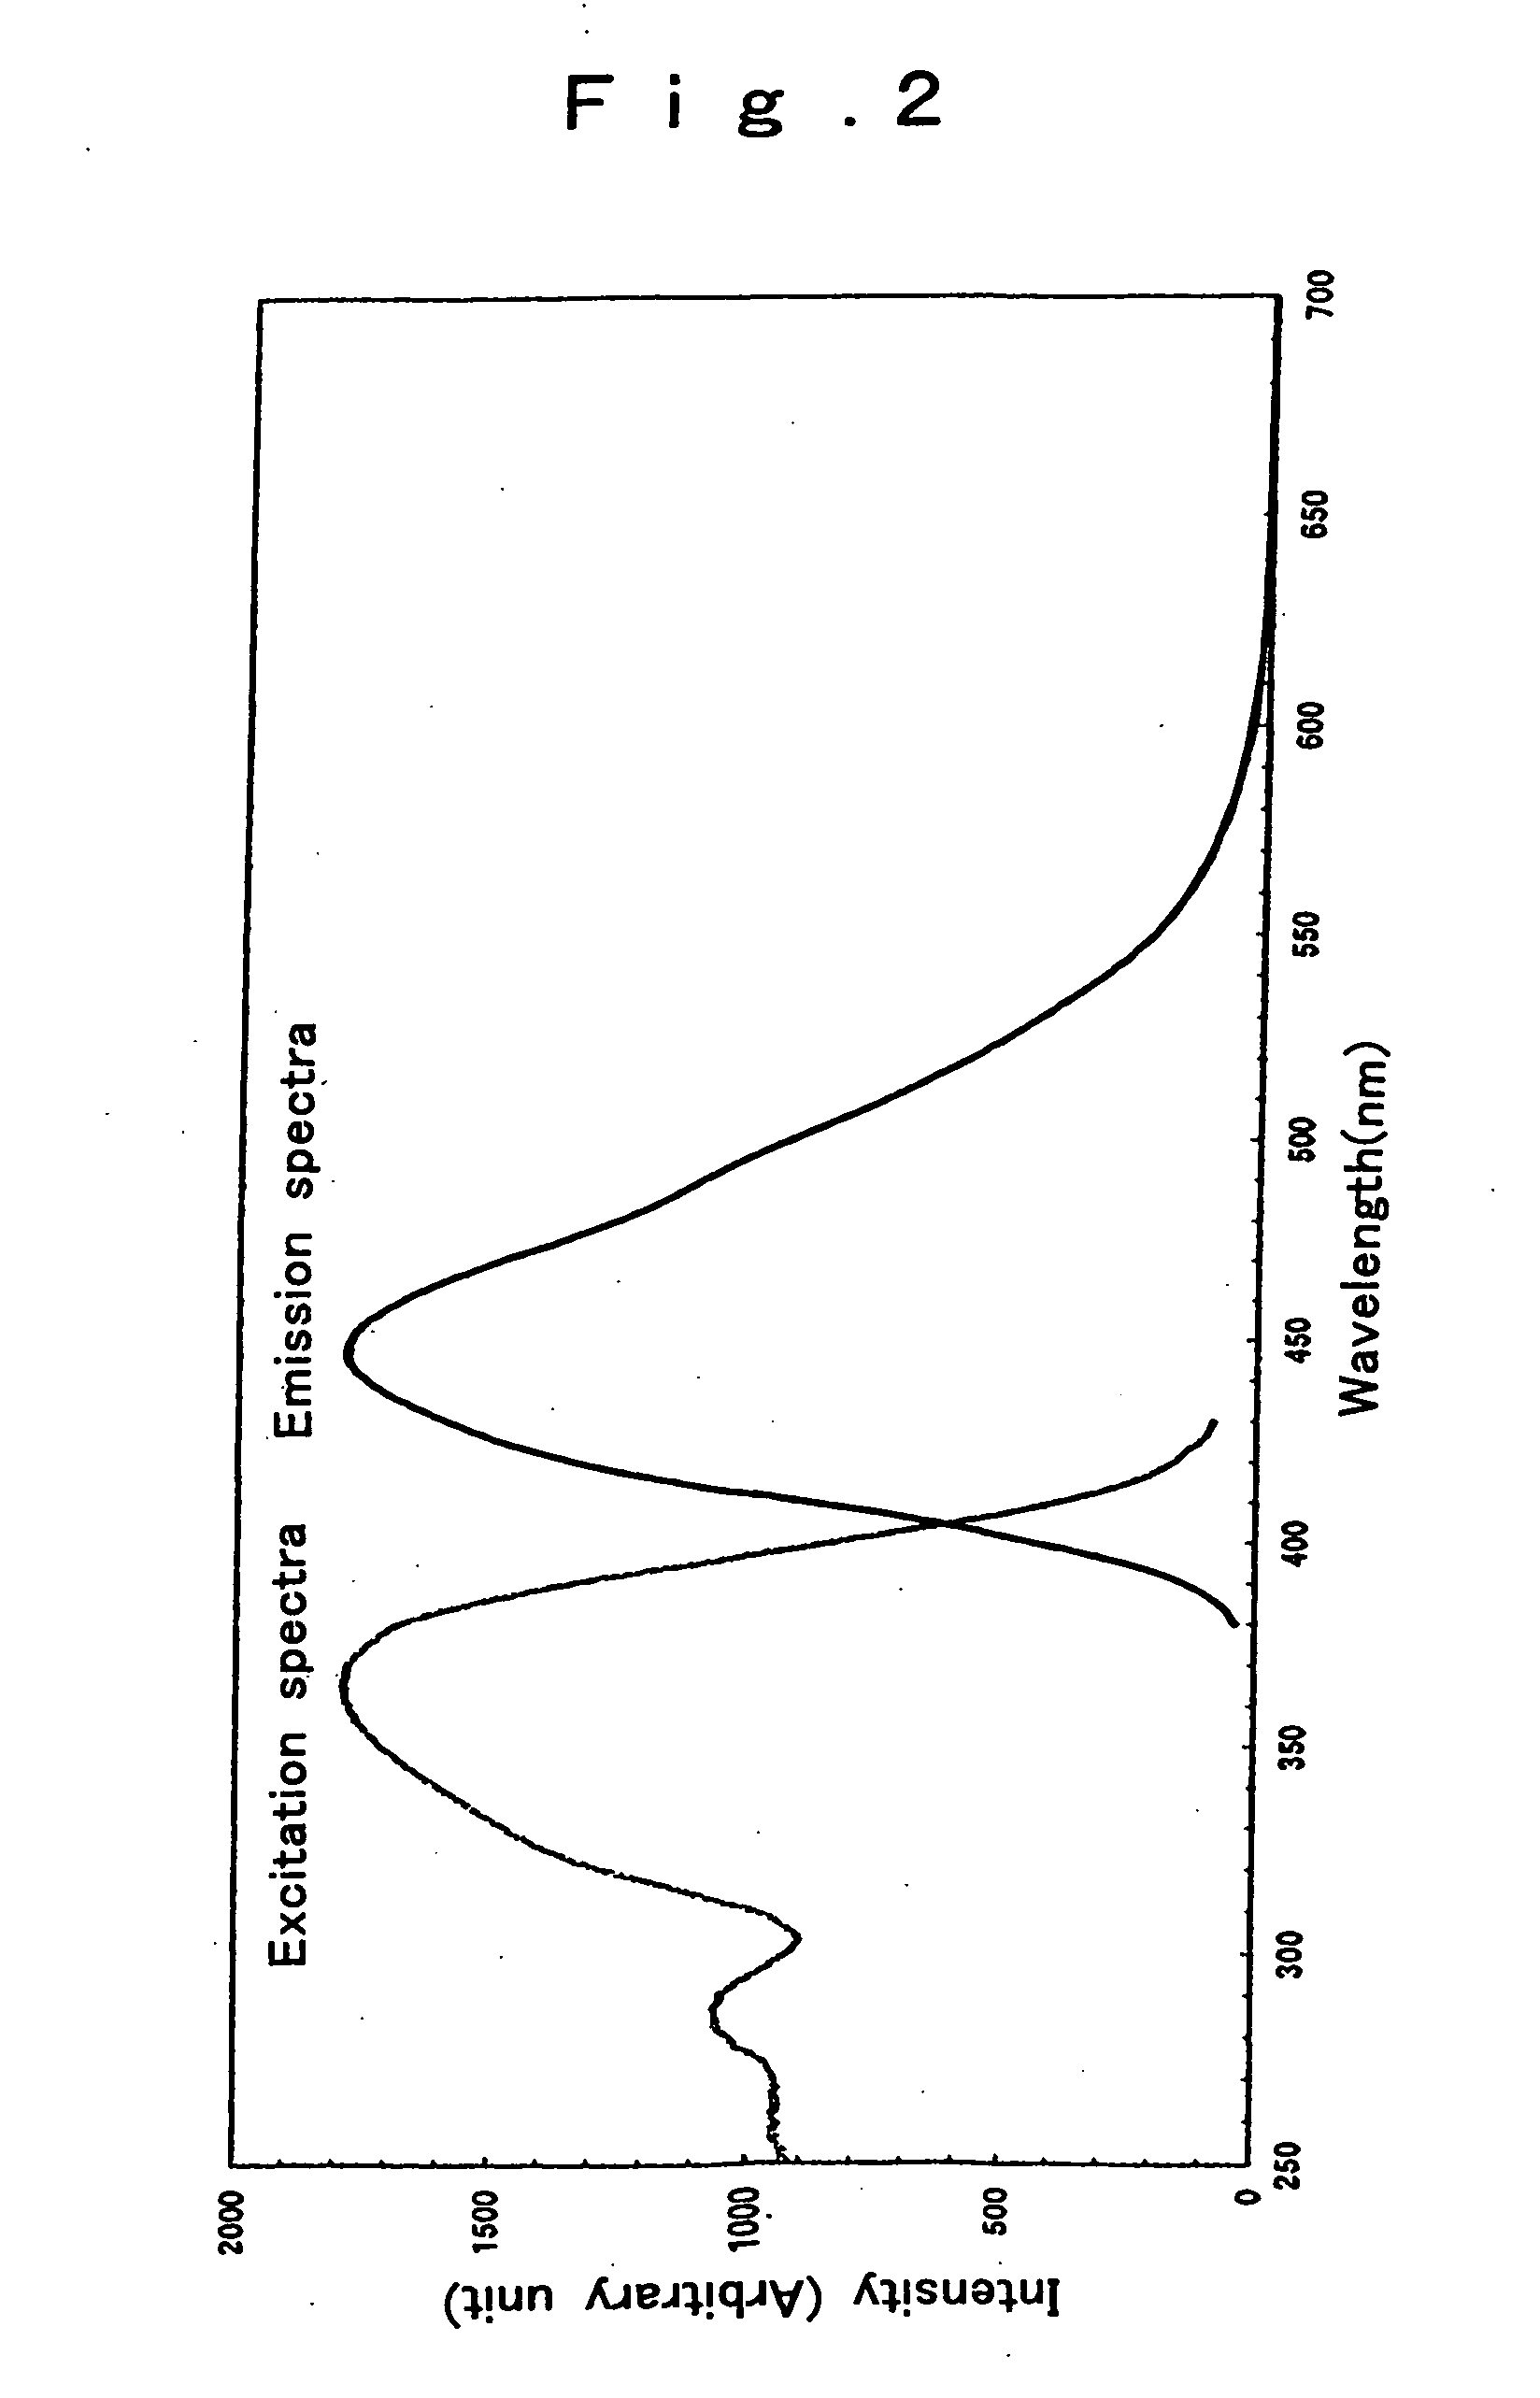 Oxynitride phosphor and light-emitting instrument